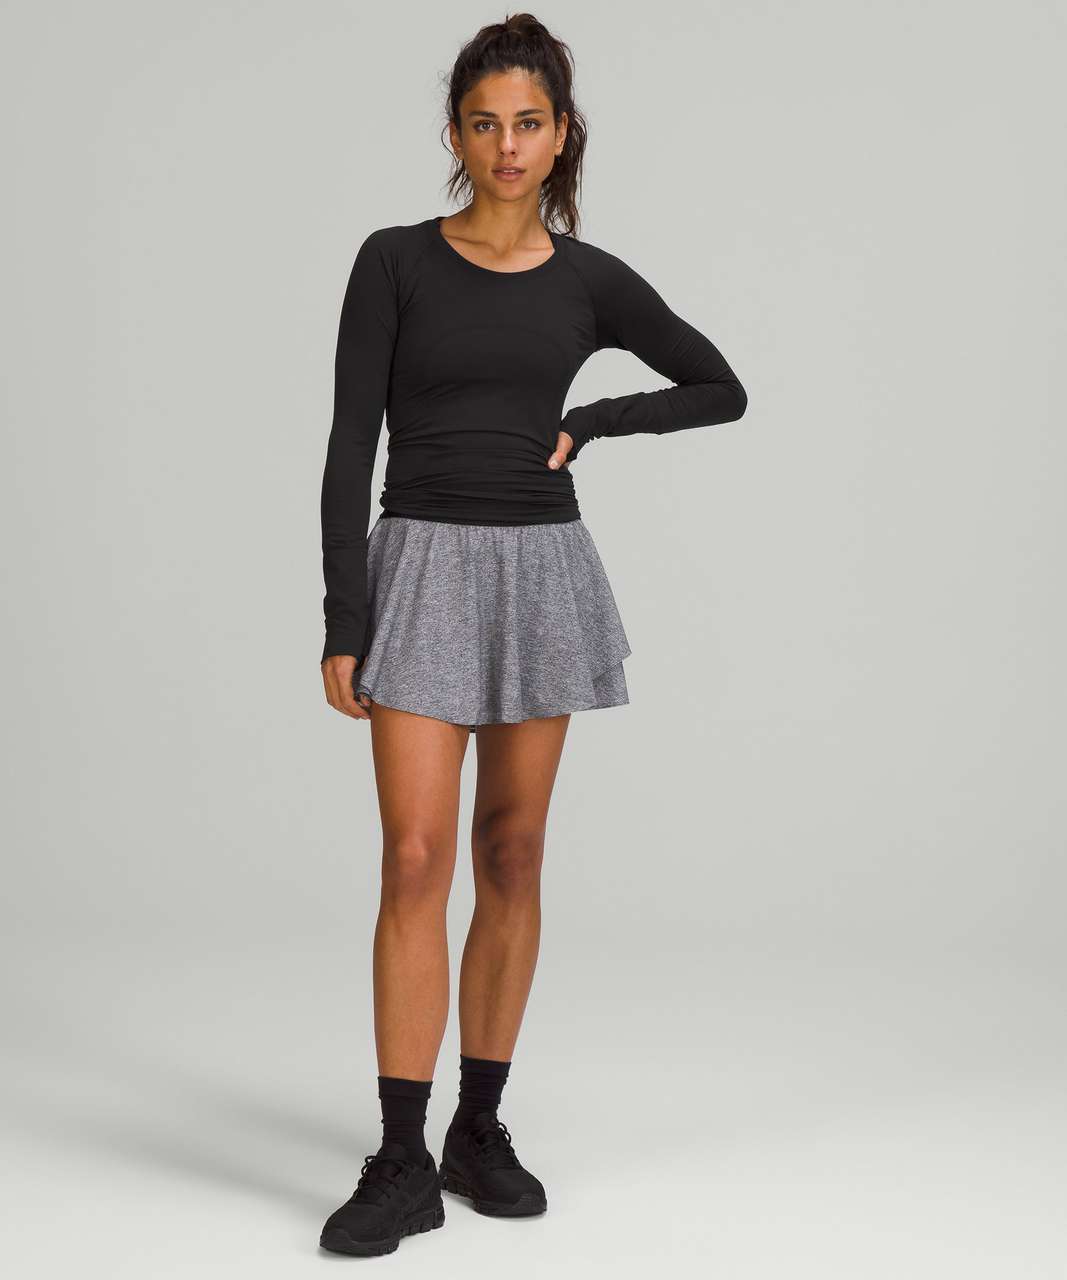 Lululemon Court Rival High-Rise Skirt - Heather Lux Multi Black / Black